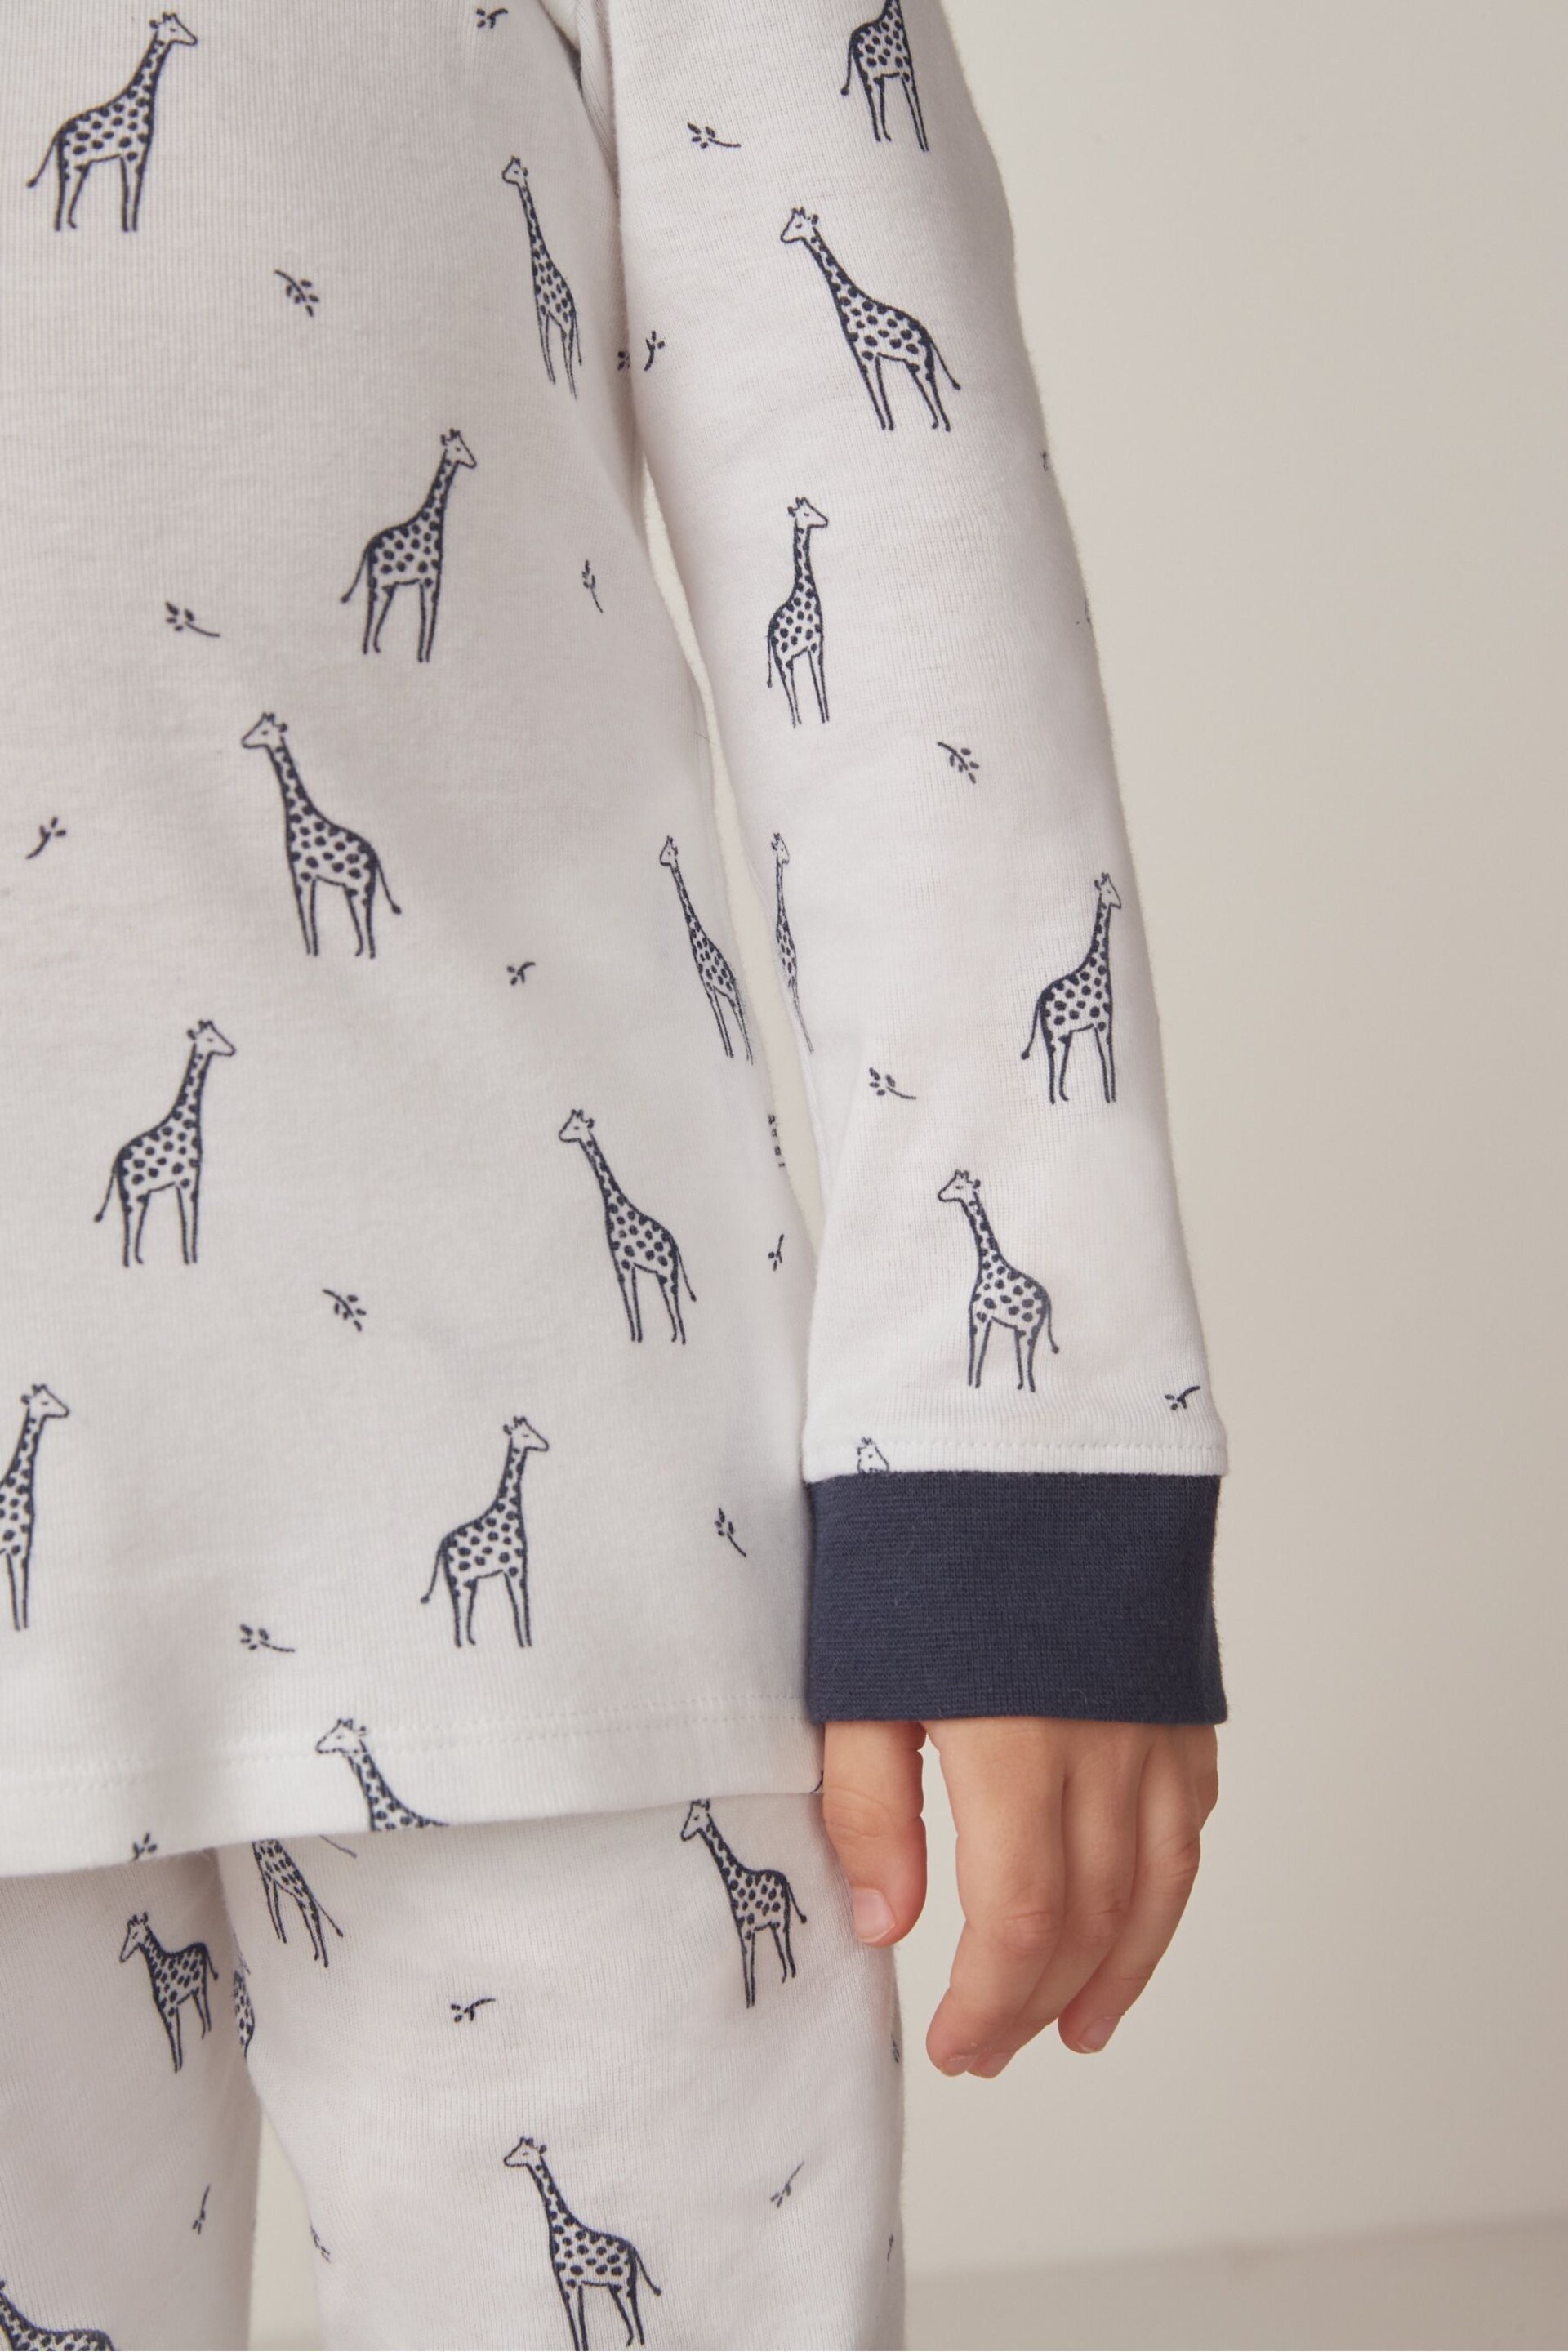 The White Company Cotton Giraffe Print White Pyjamas - Image 4 of 6